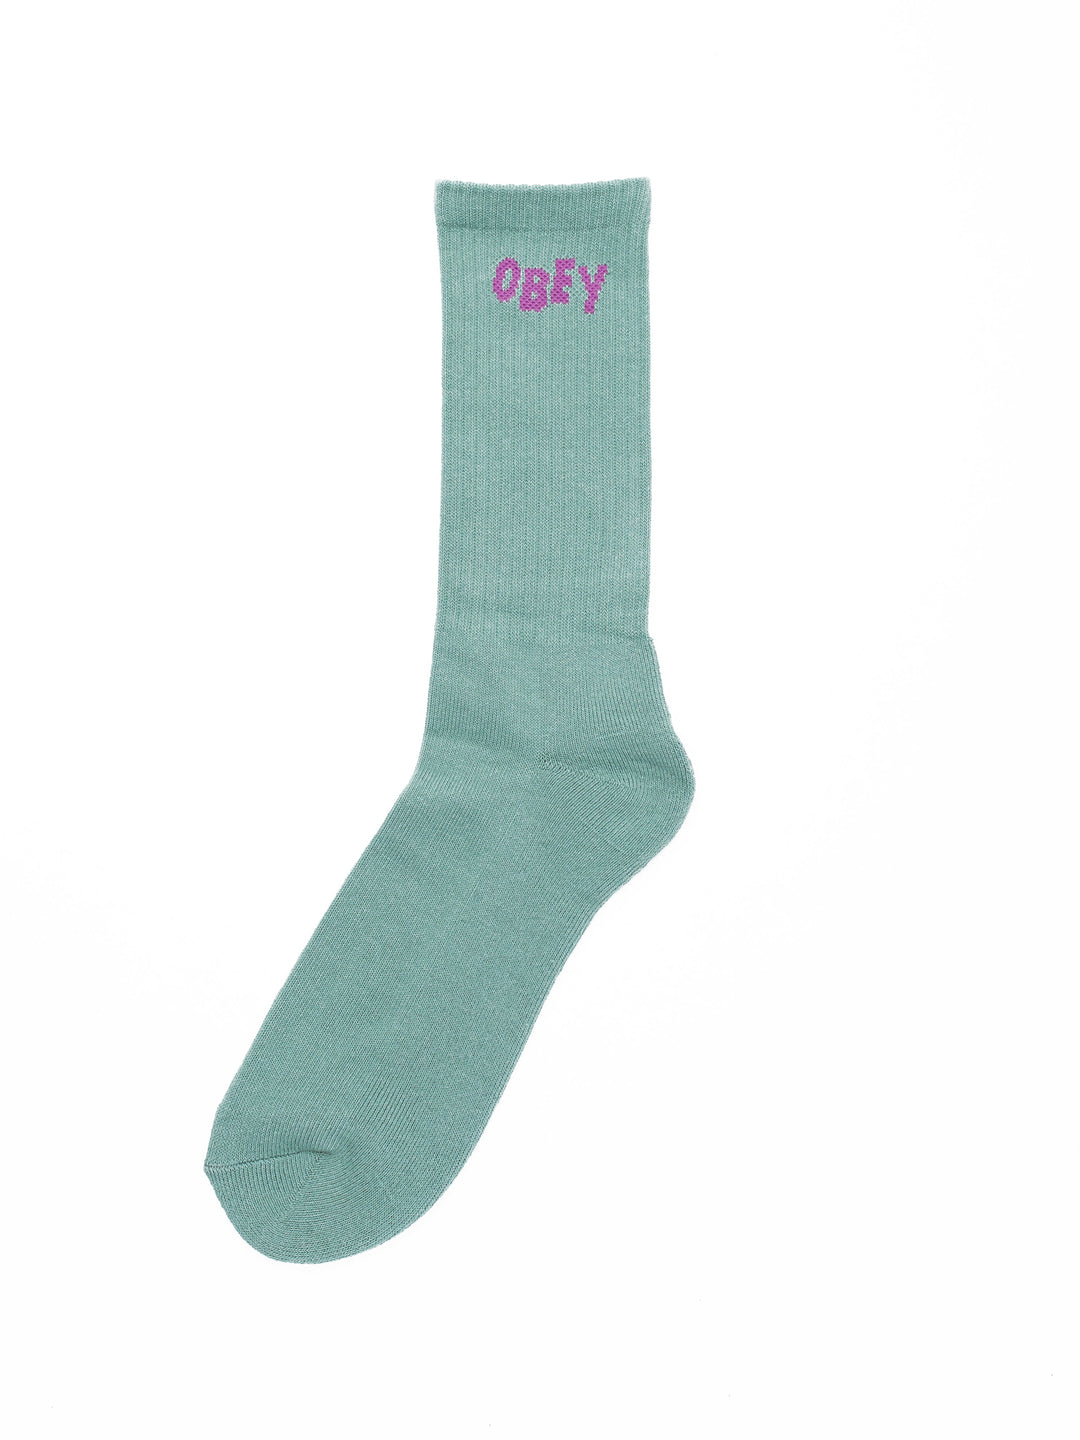 Obey Jumbled Socks | Sage/Mauve - West of Camden - Main Image Number 1 of 1